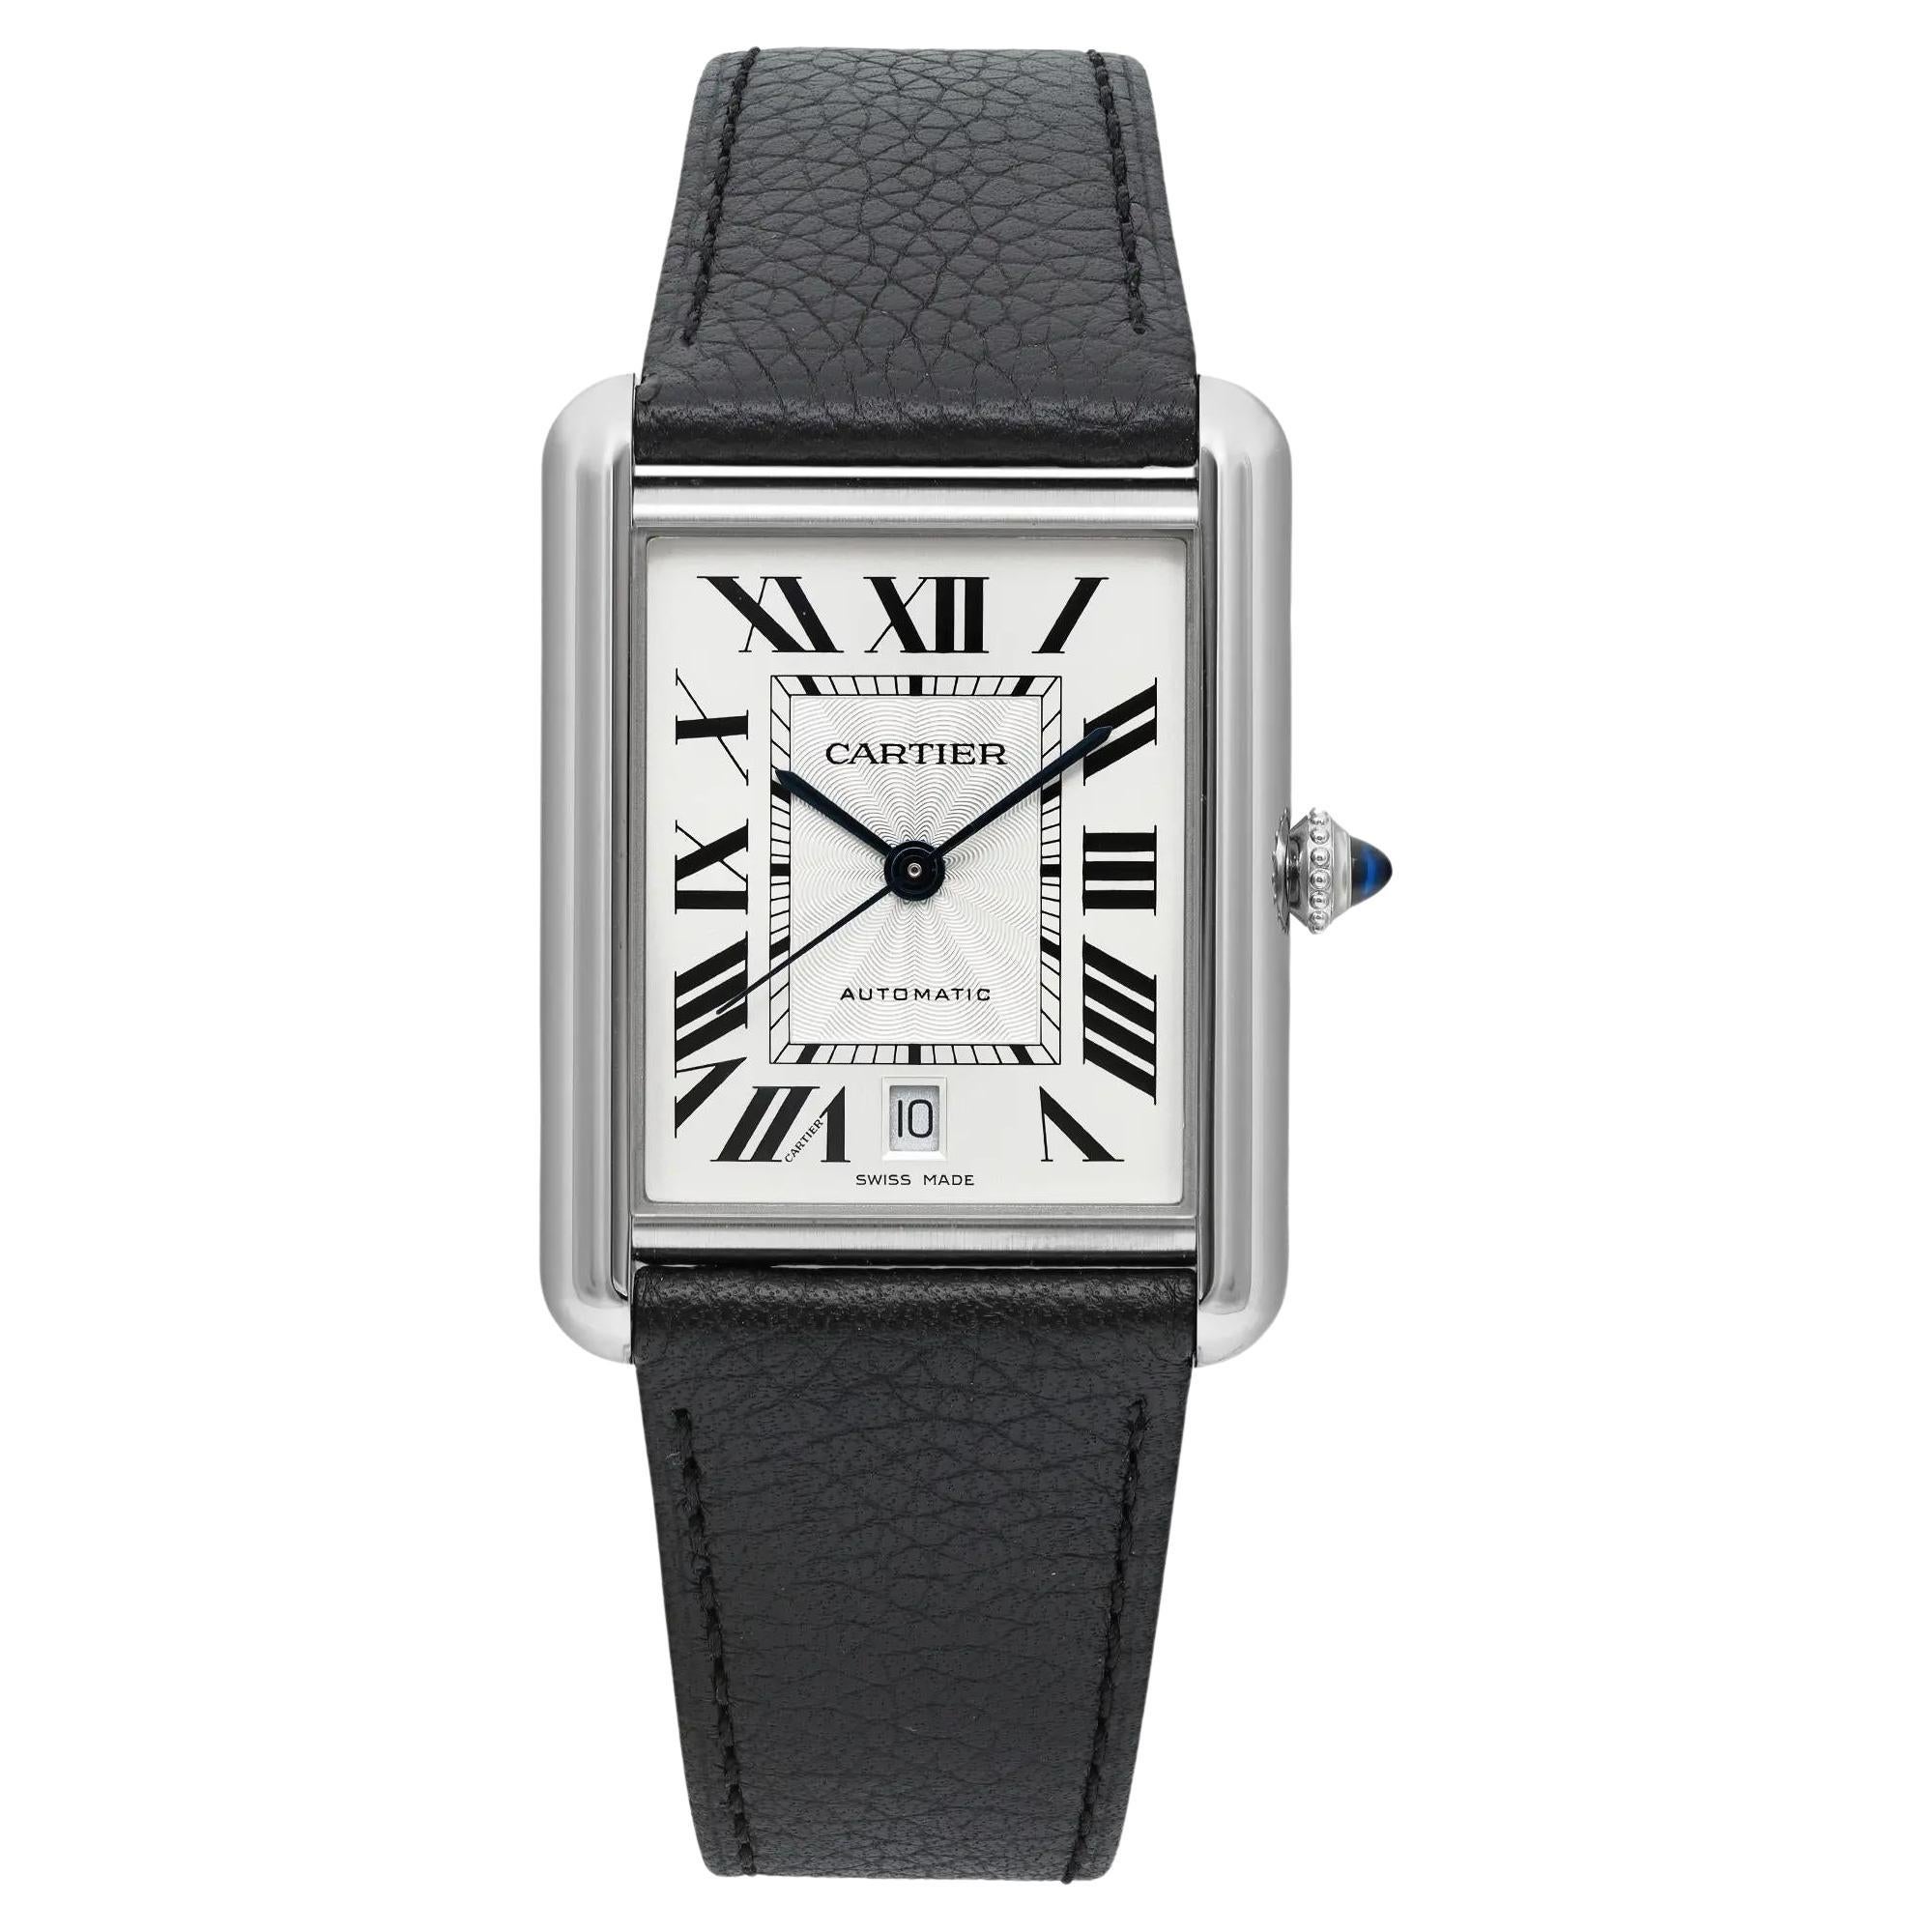 Do Cartier Tank watches appreciate in value?